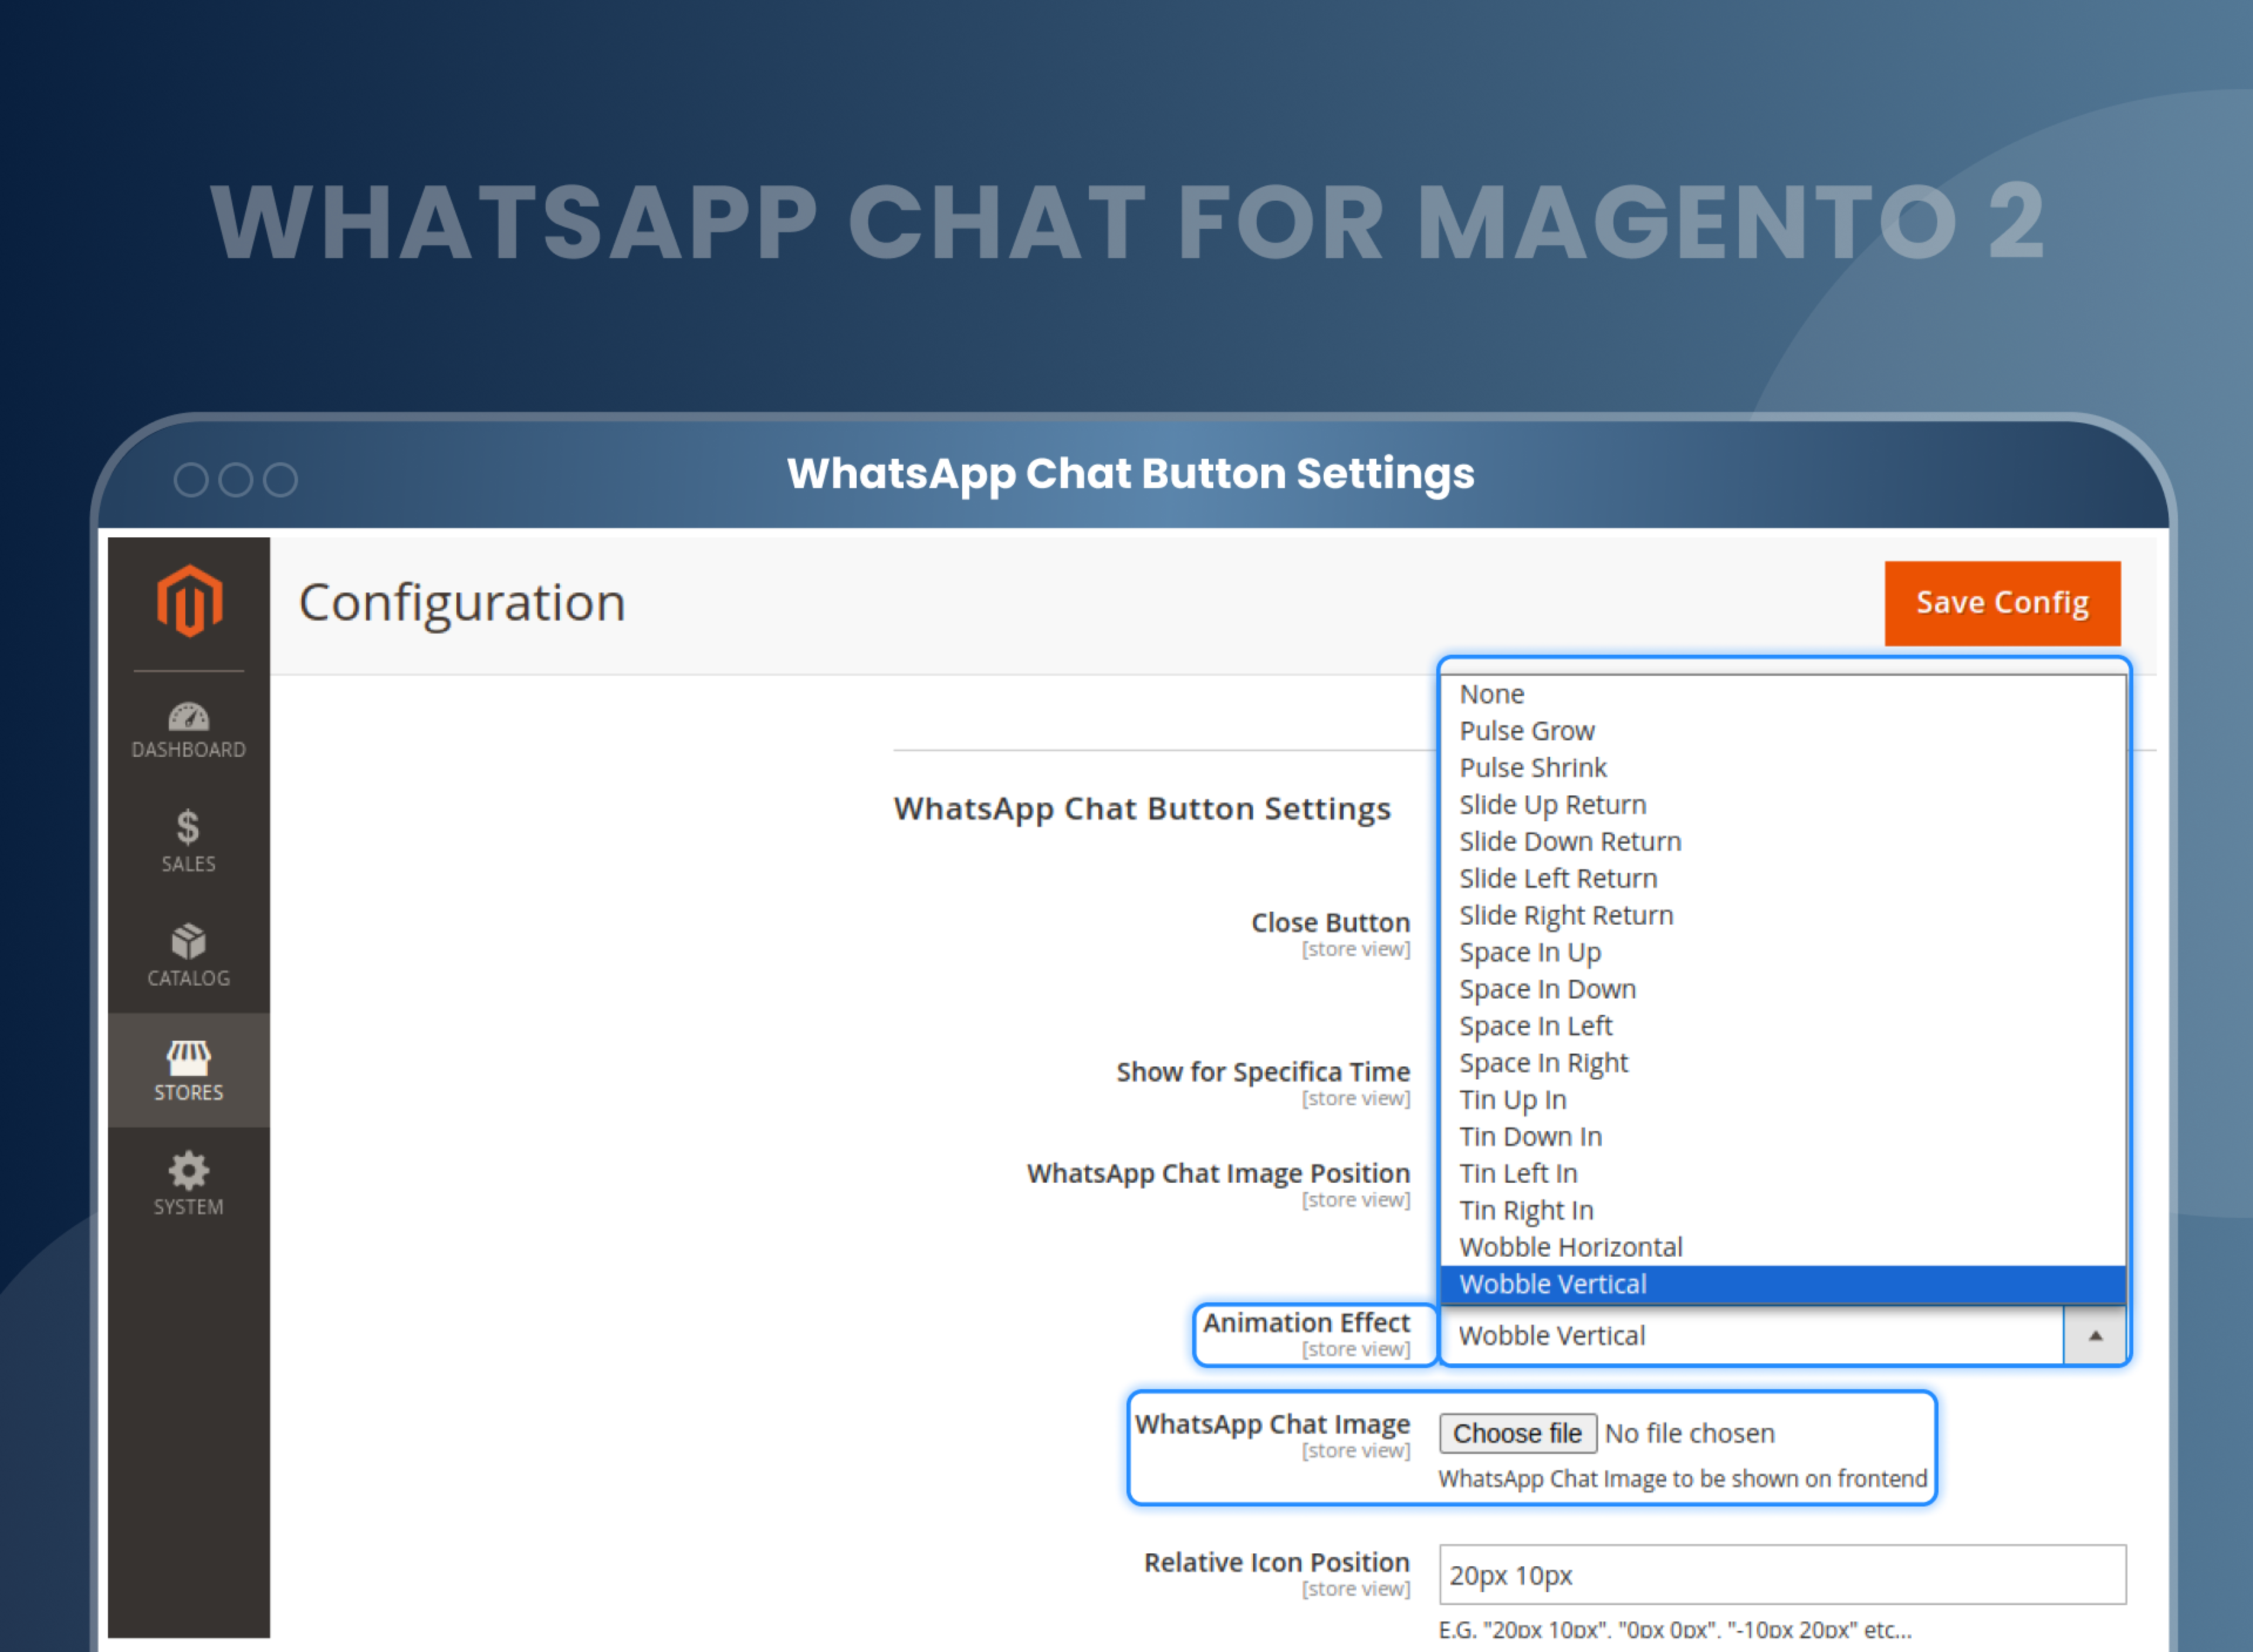 WhatsApp Chat Button Settings